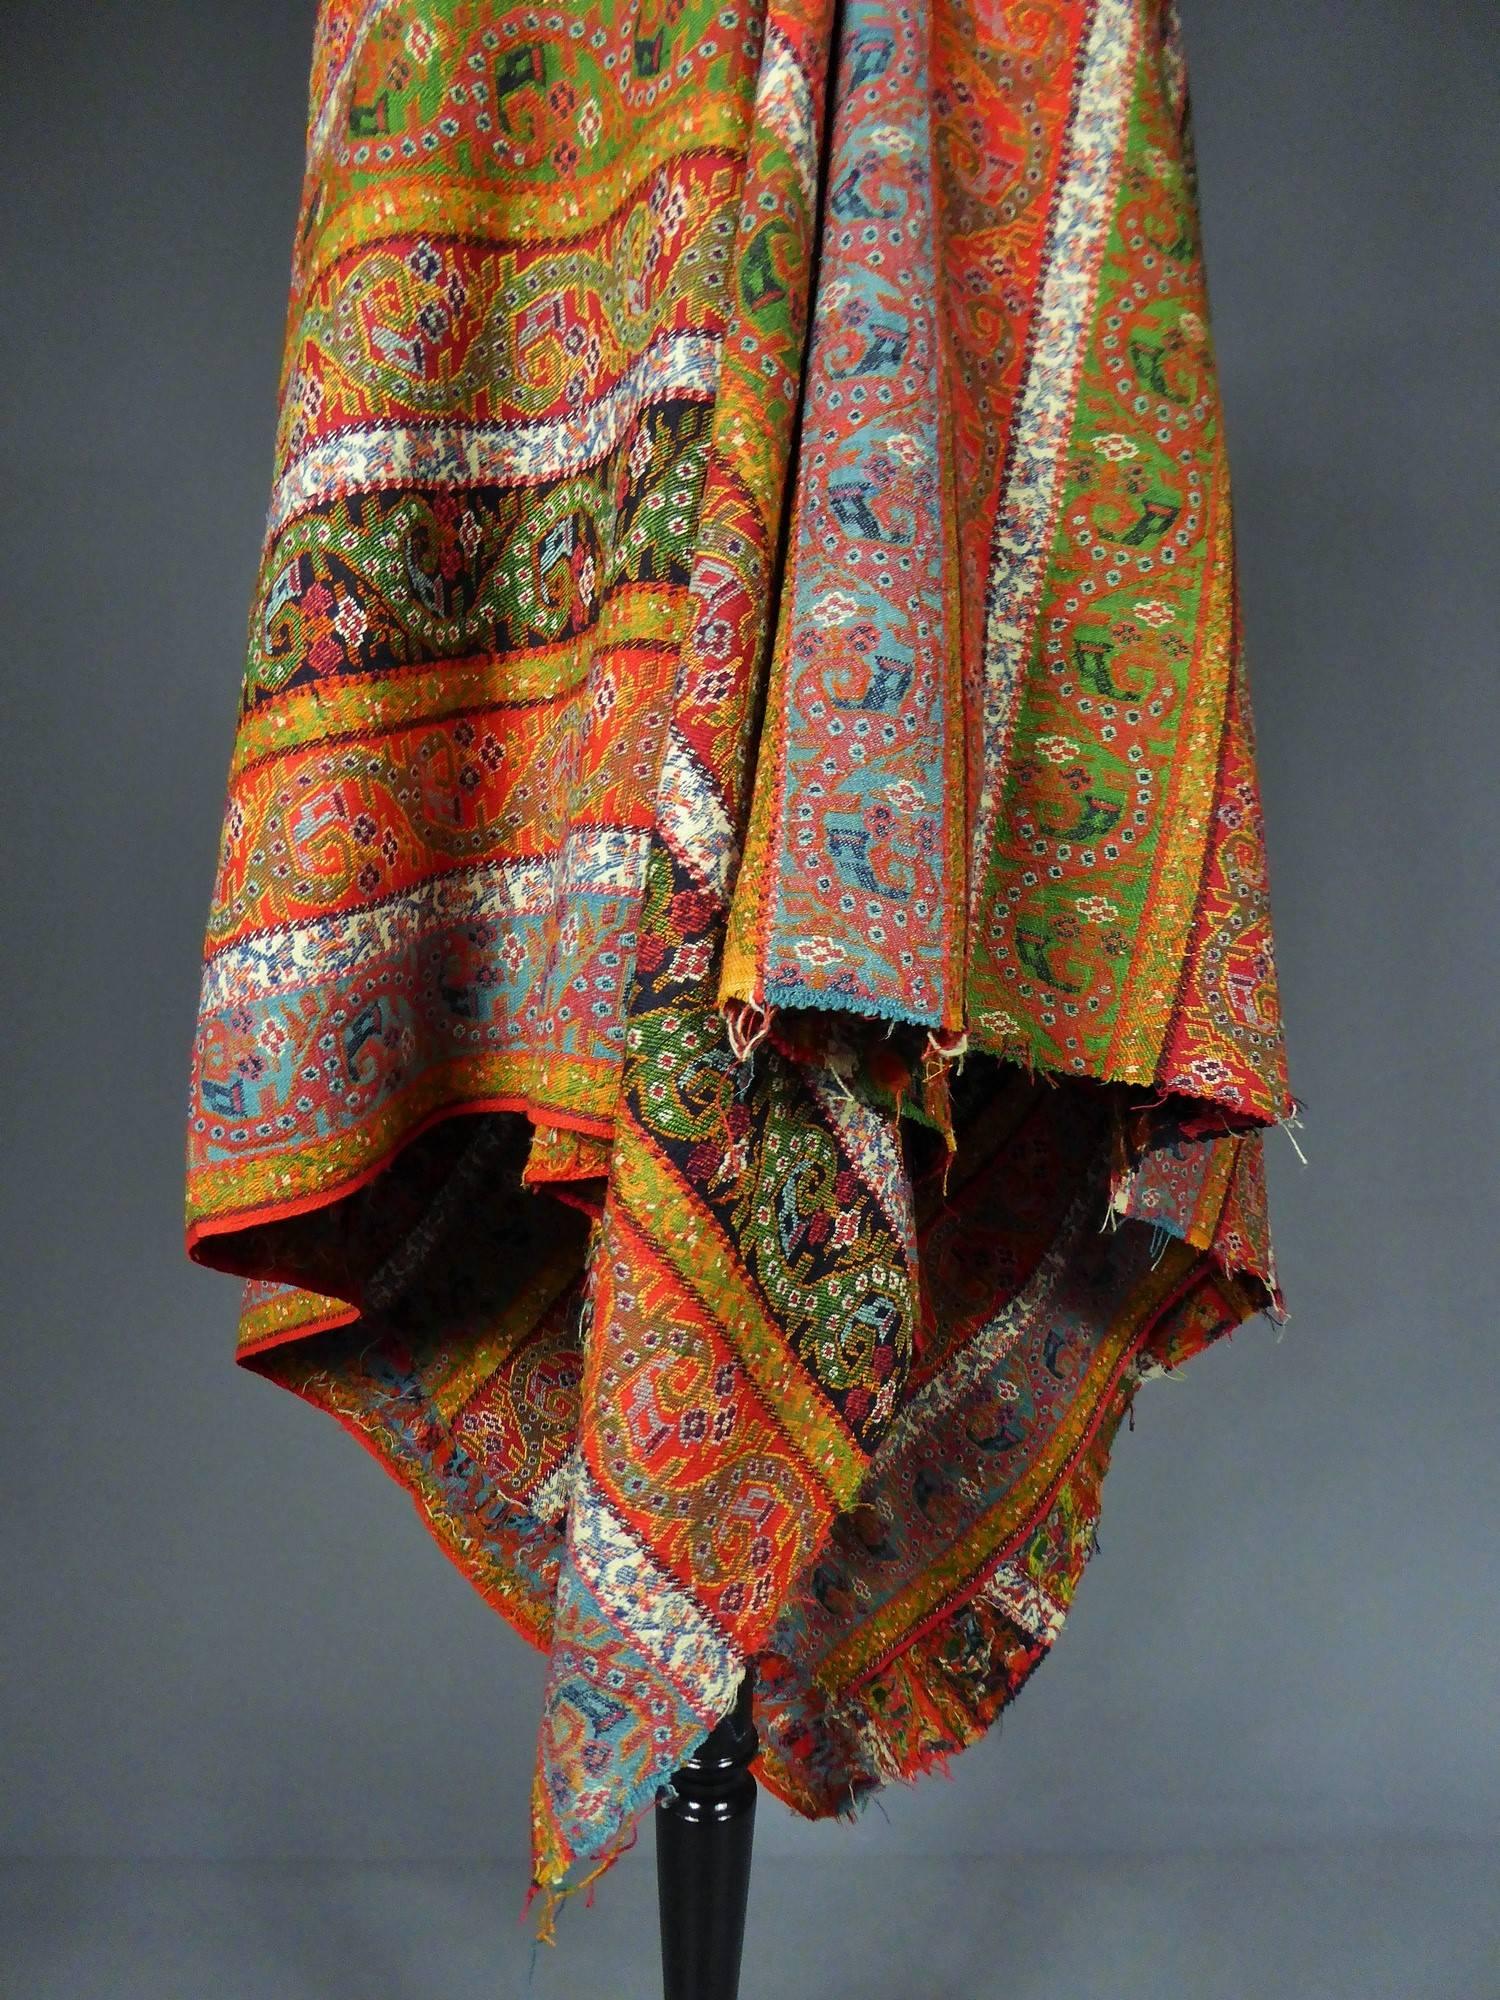 Twill weave striped kashmir shawl  - India or Persia 19th century 6